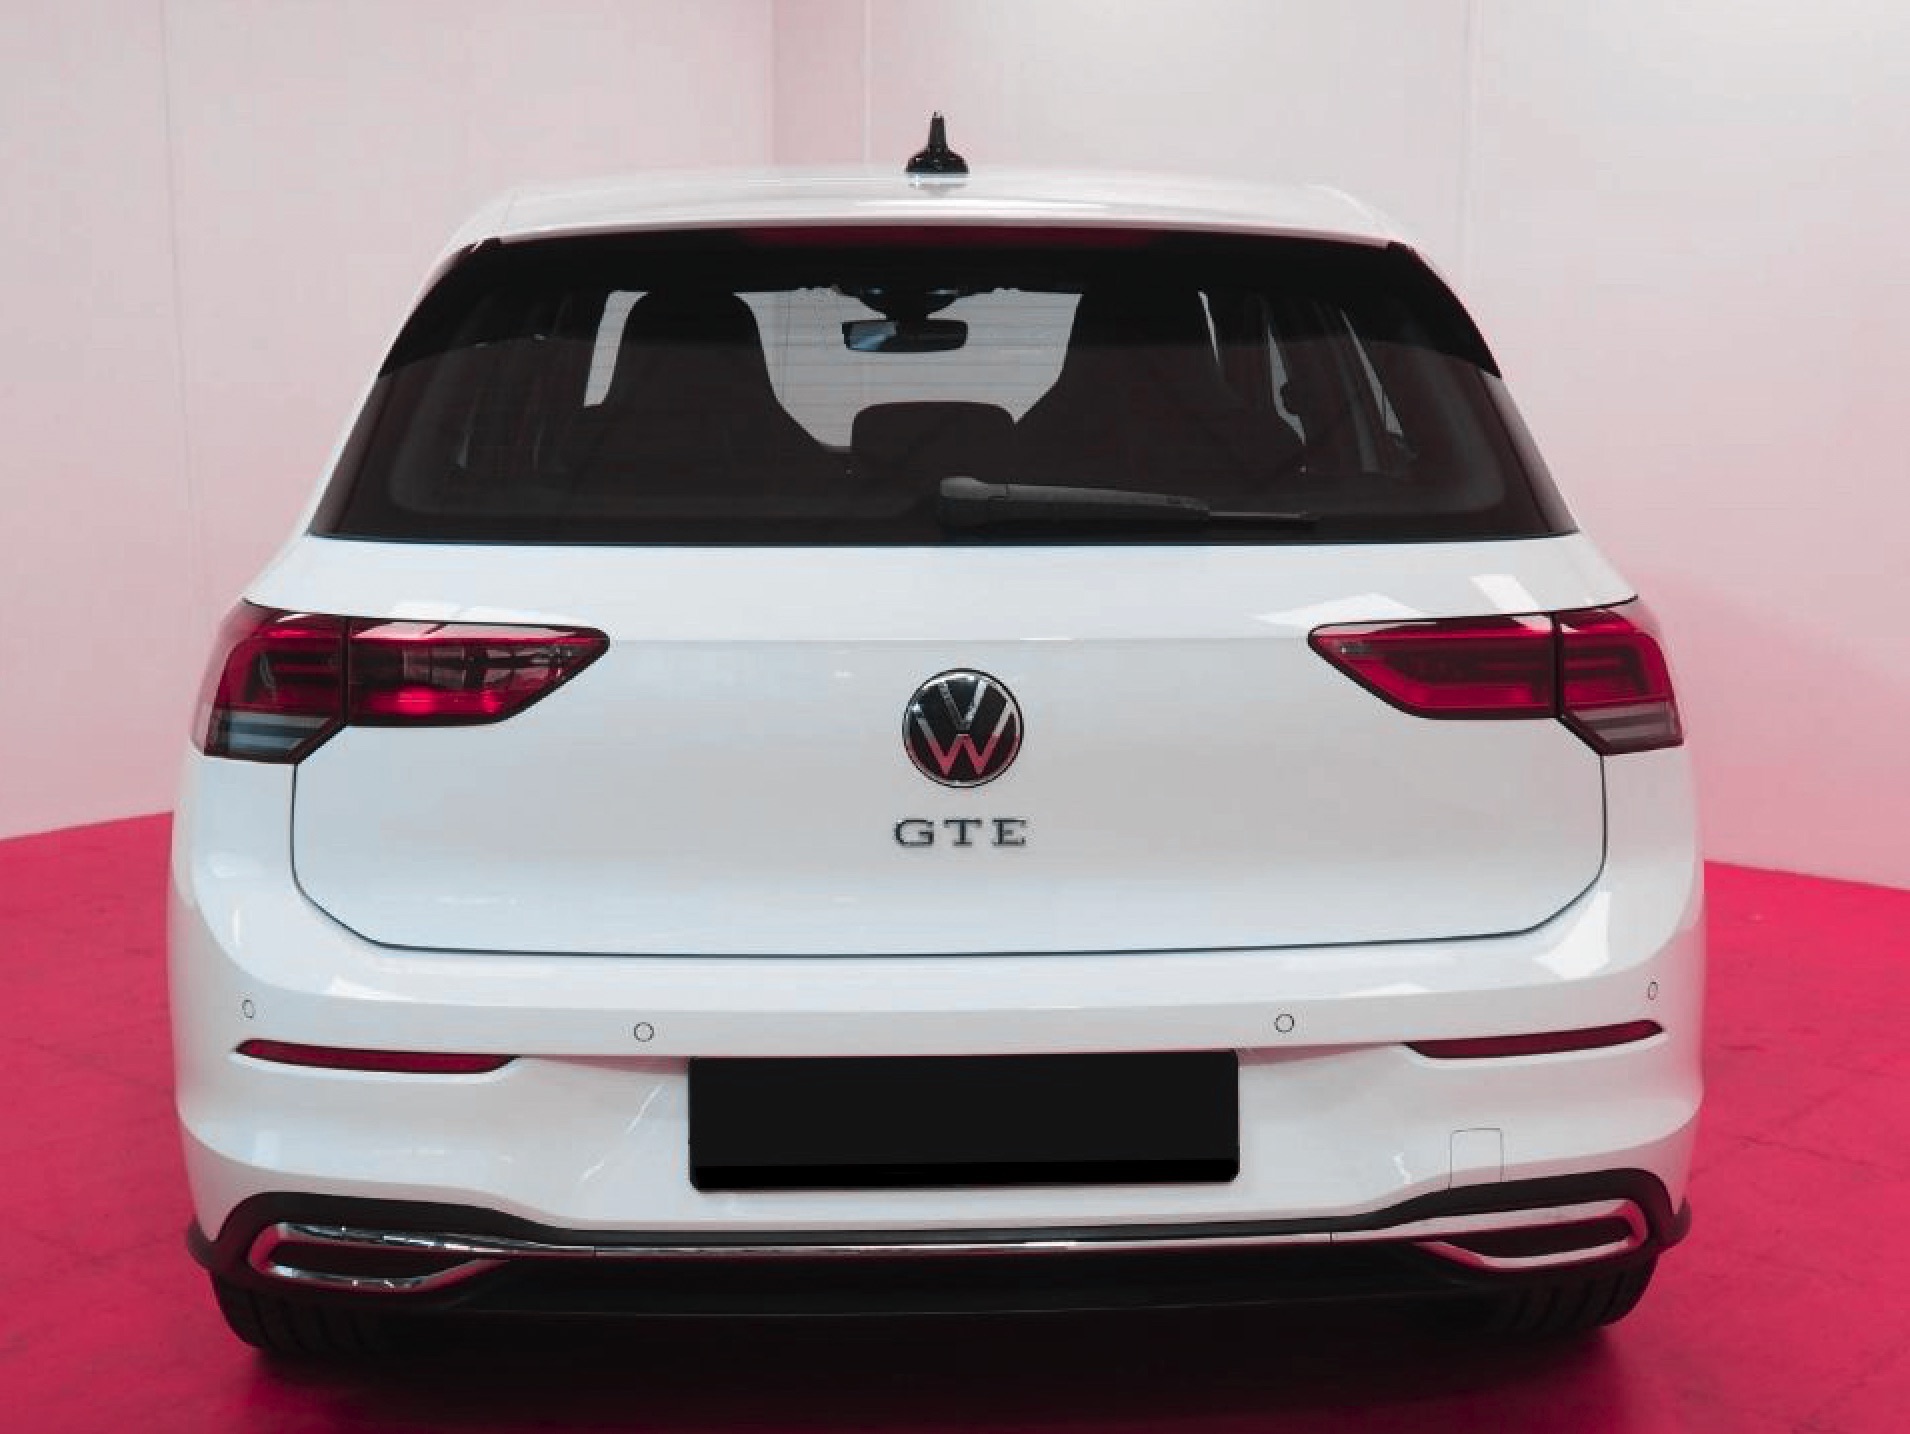 Volkswagen Golf- GTE 1.4TSI DSG - Benzin/Electro Plug-in Hybrid 180 kW / 245 HP - 13 kWh battery - White - 17&quot; &quot;Richmond&quot; wheels - 38500 km - 2020.12.